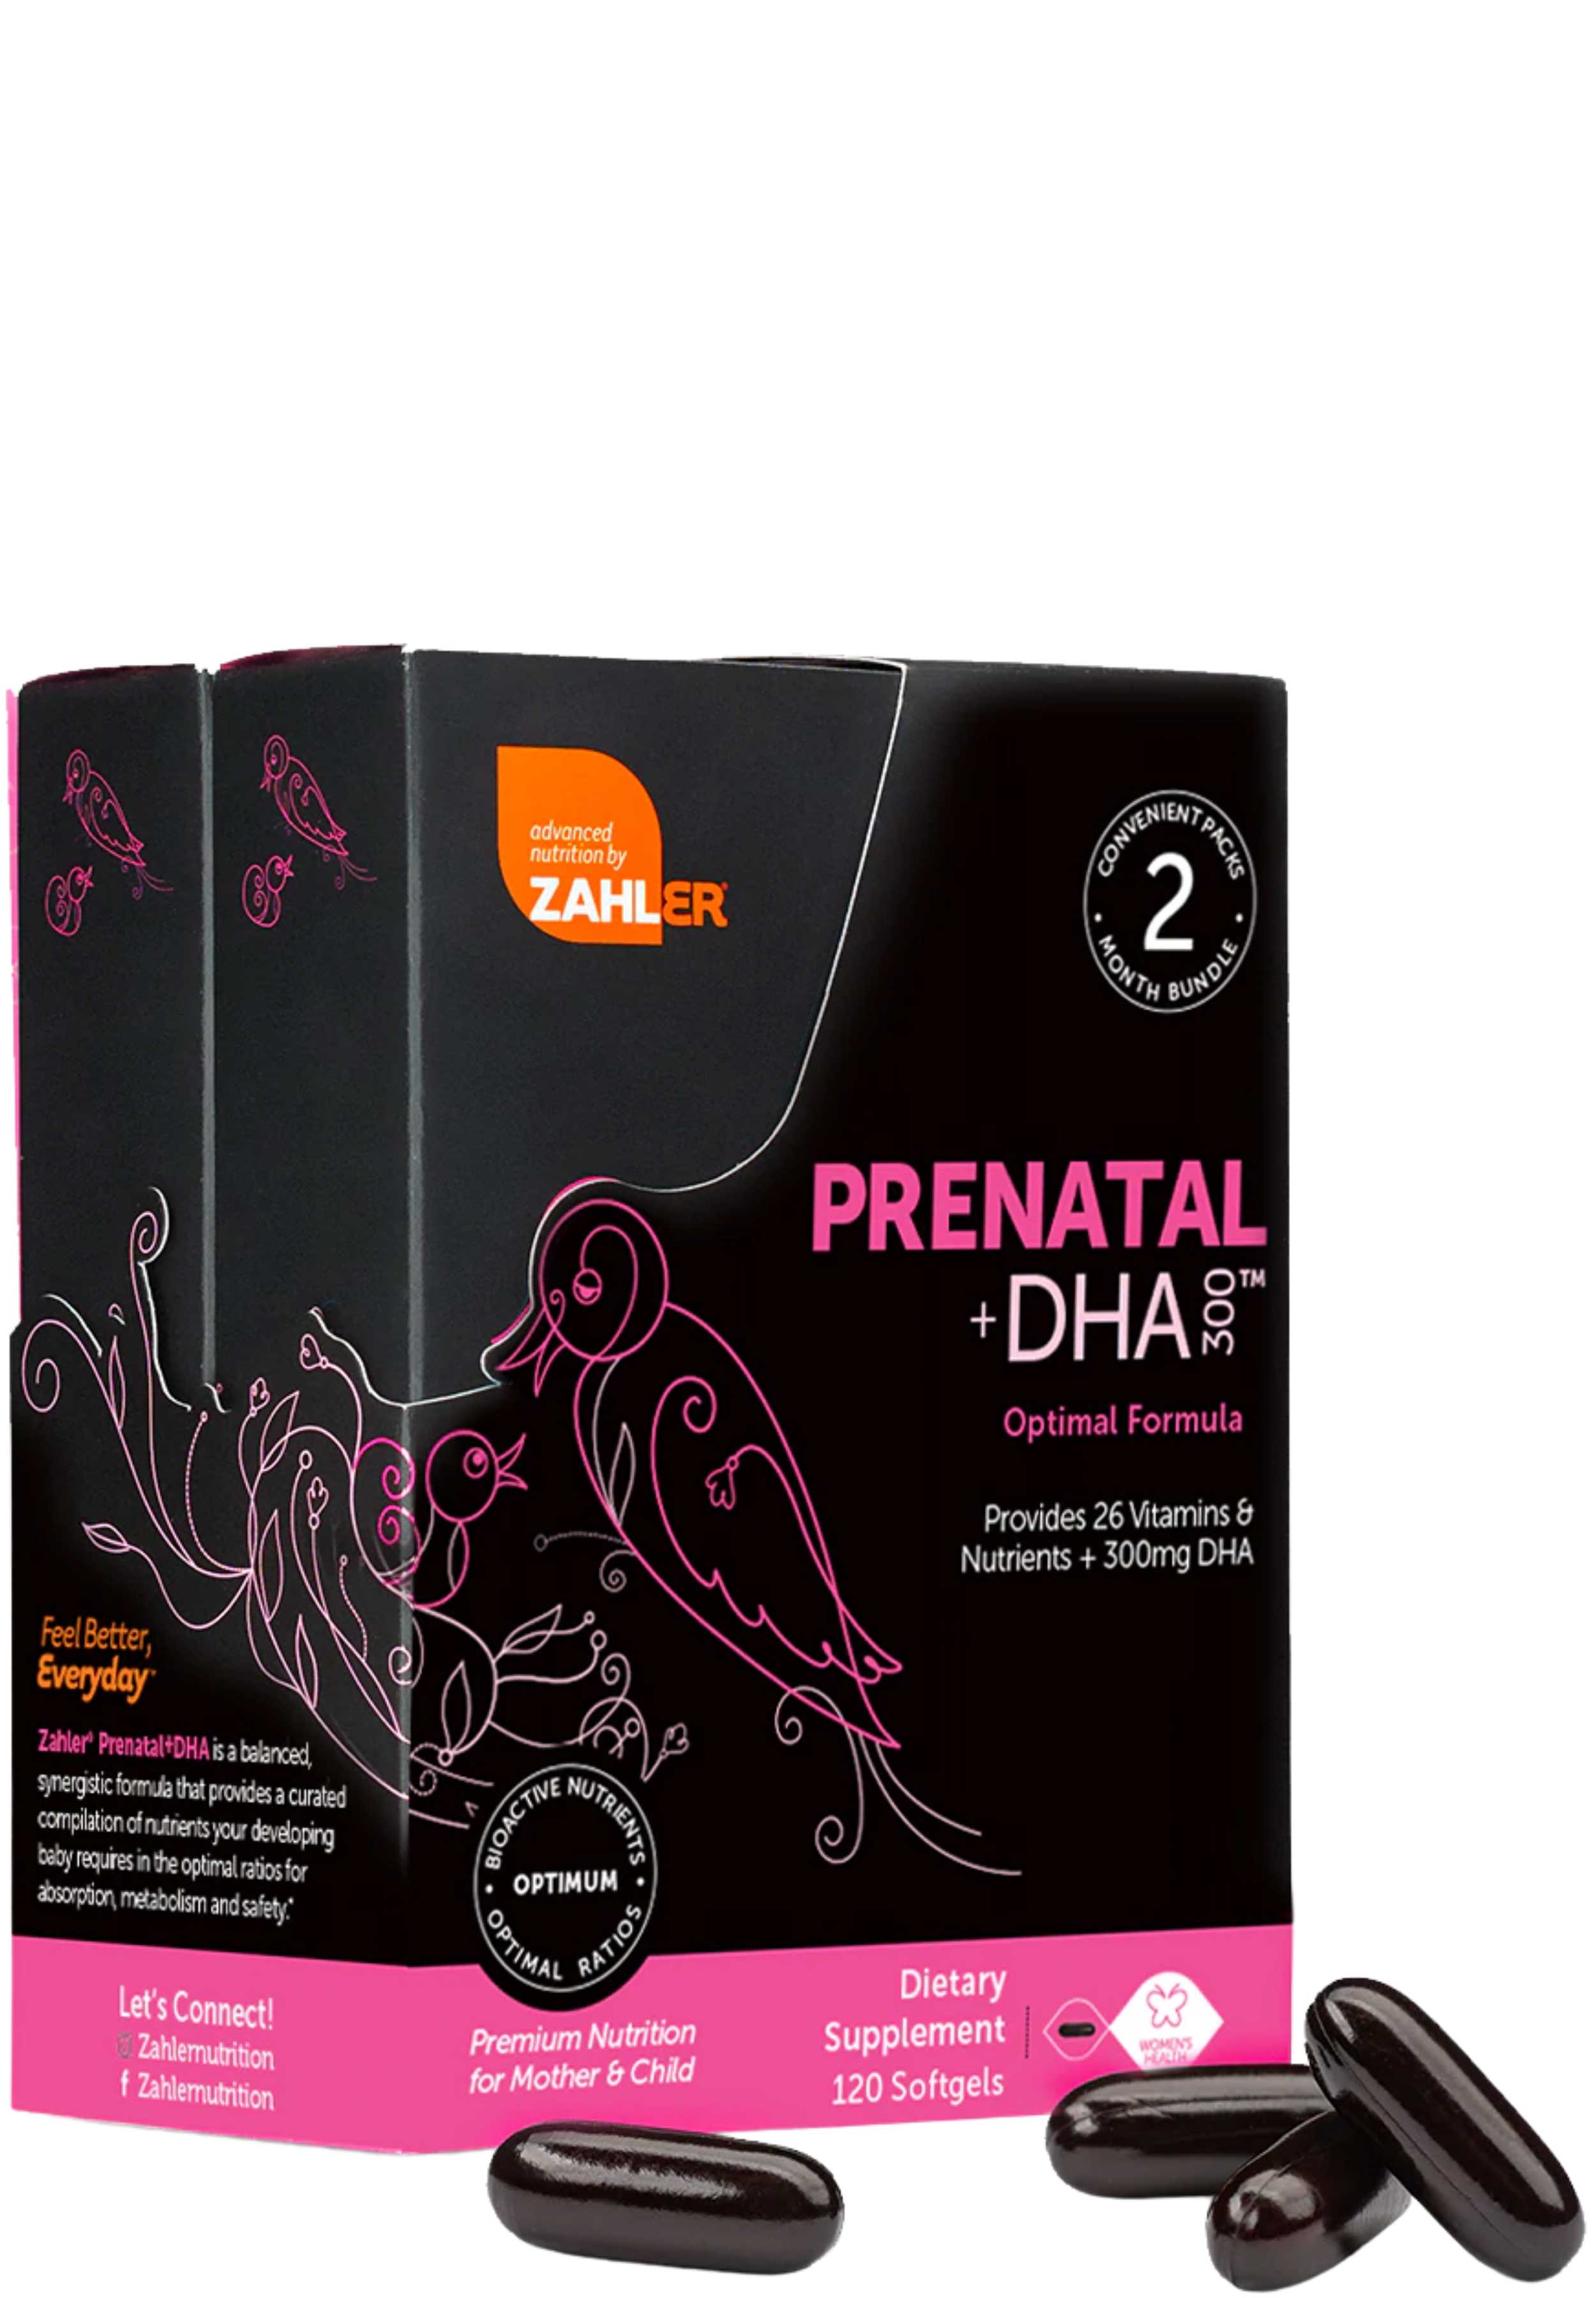 Advanced Nutrition By Zahler Prenatal +DHA